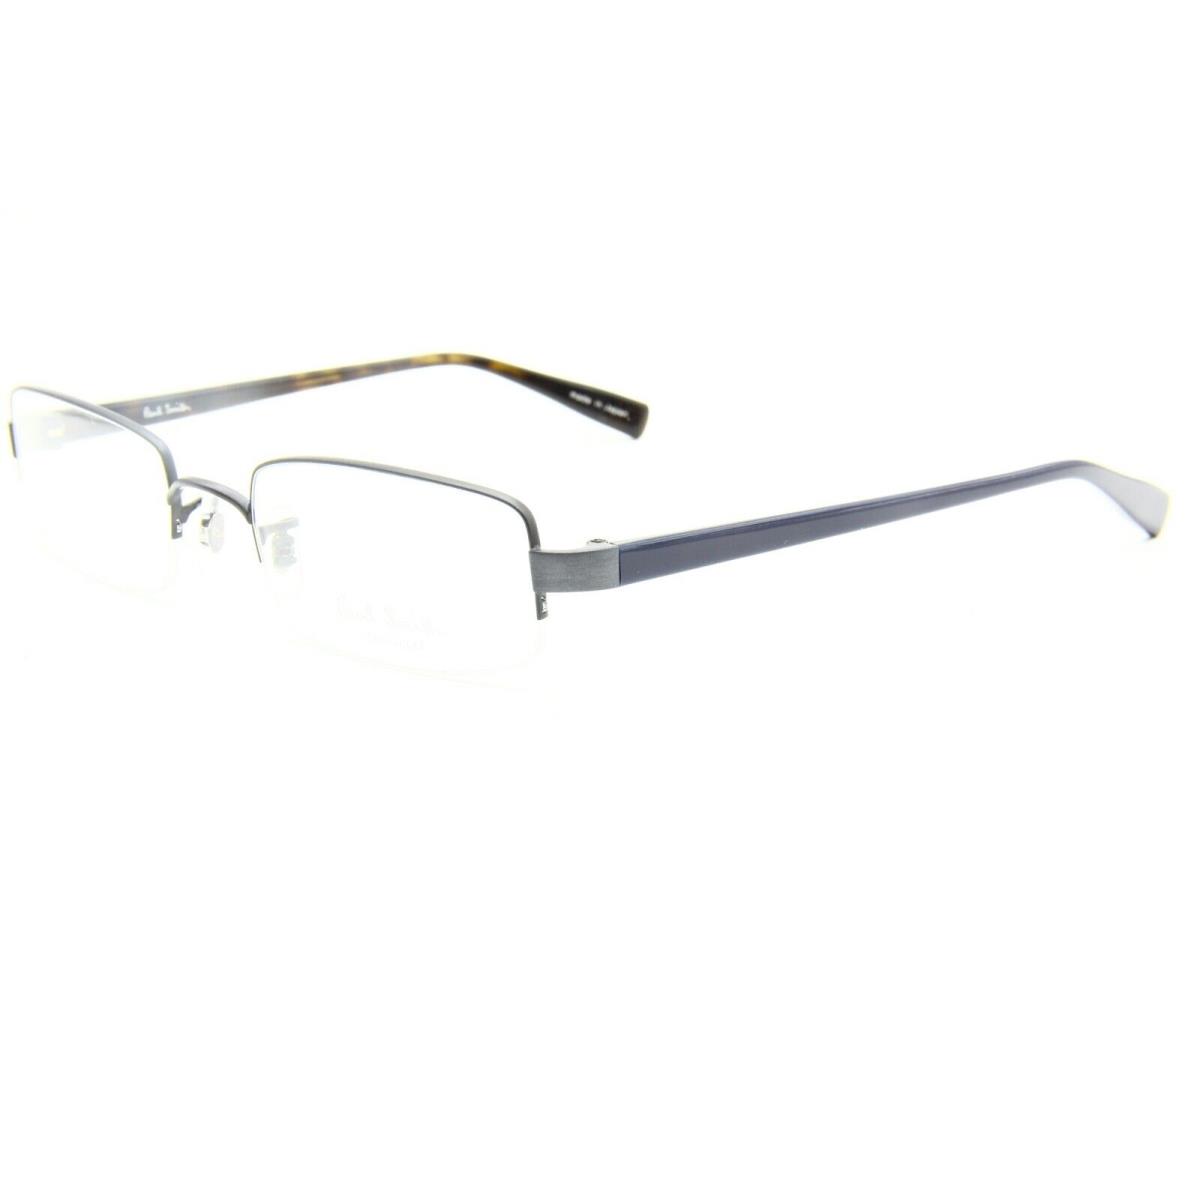 Paul Smith PS-1015 Navy/mboak Blue Eyeglasses Frame RX 51-20